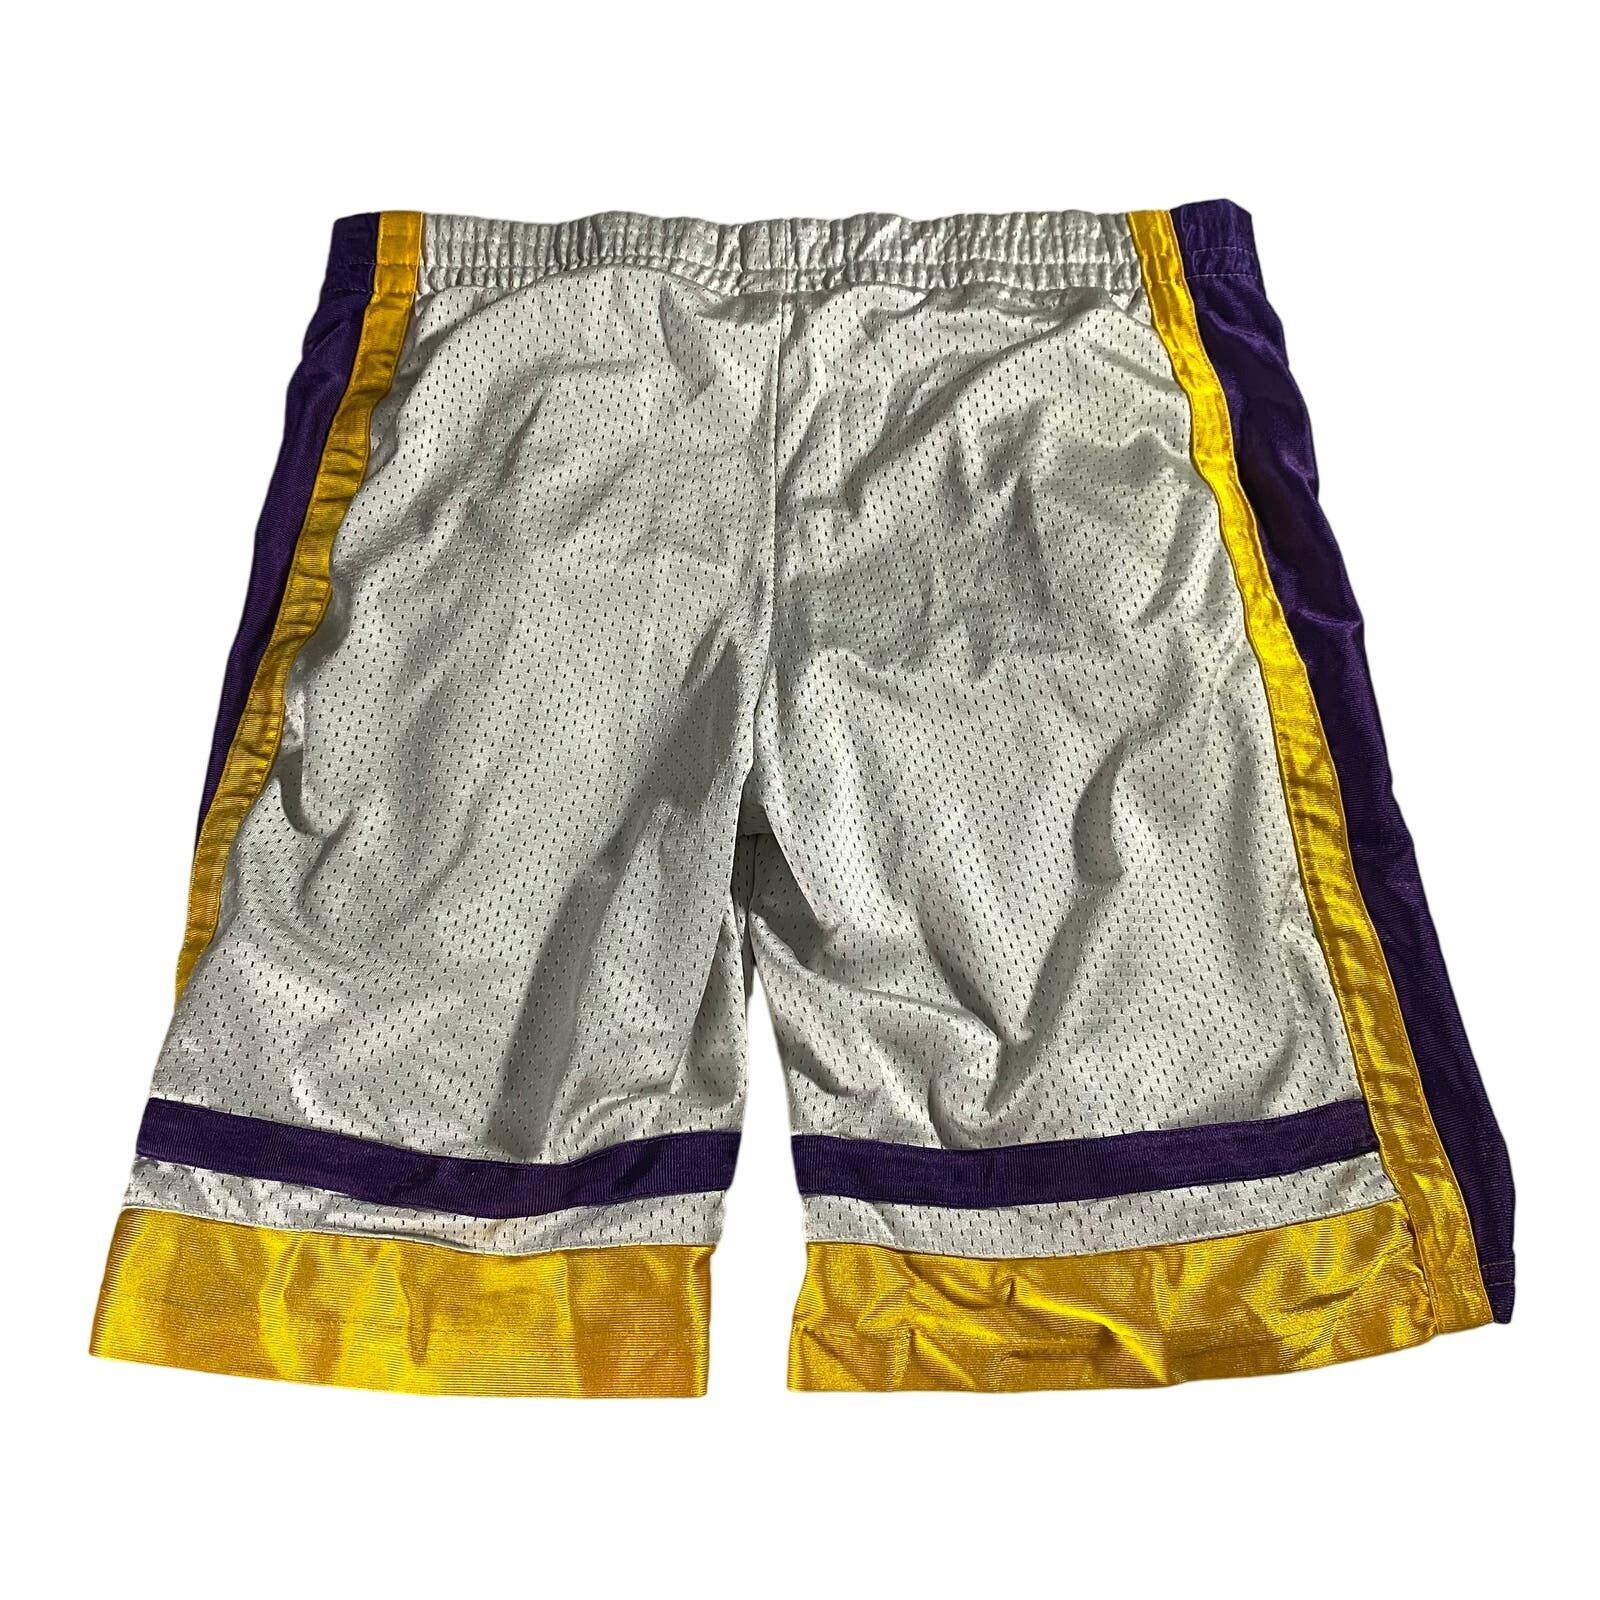 Vintage VTG 90s Colosseum Athletics Lakers Basketball Shorts Men's S Size US 34 / EU 50 - 2 Preview